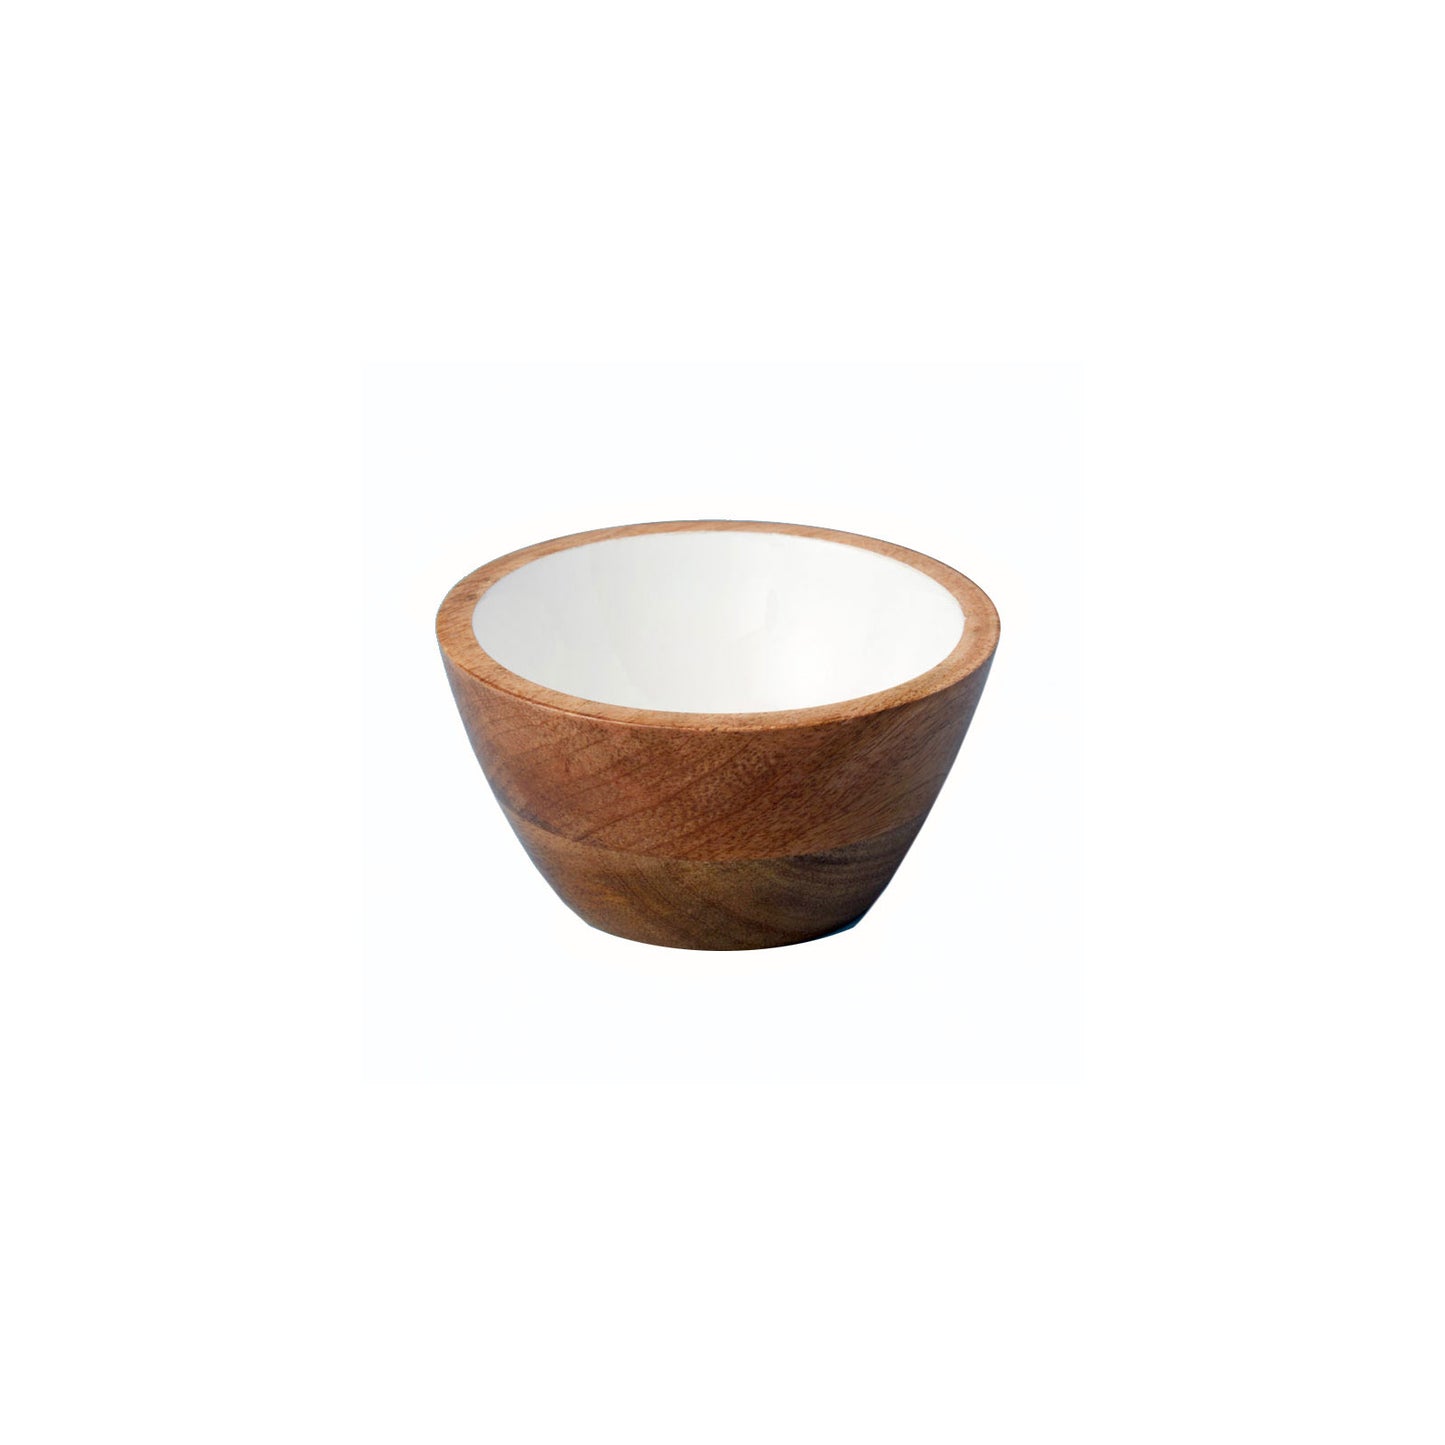 Mango Wood and White Enamel Bowl, Small